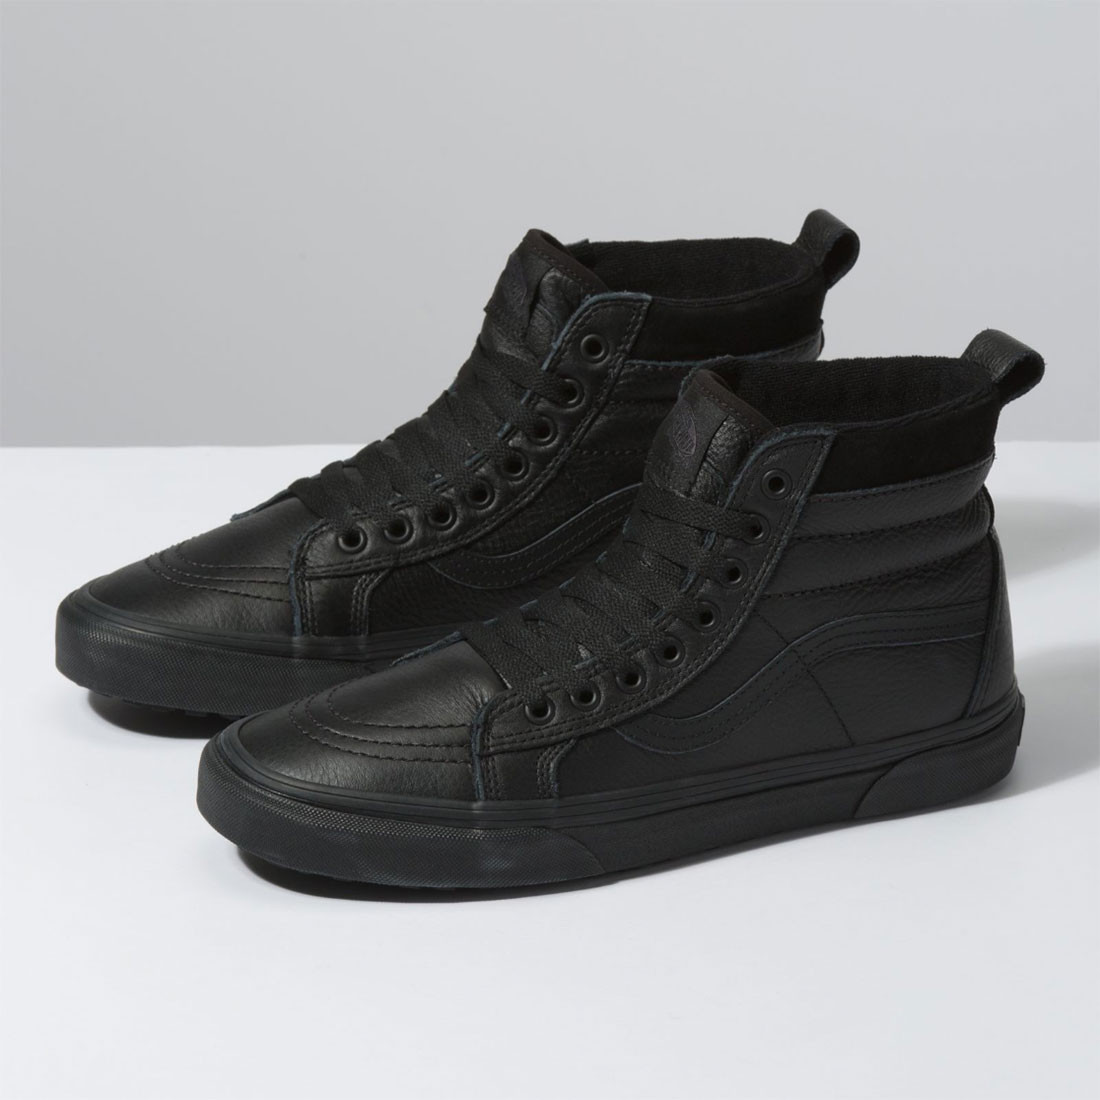 vans sk8 hi mte black leather cheap online